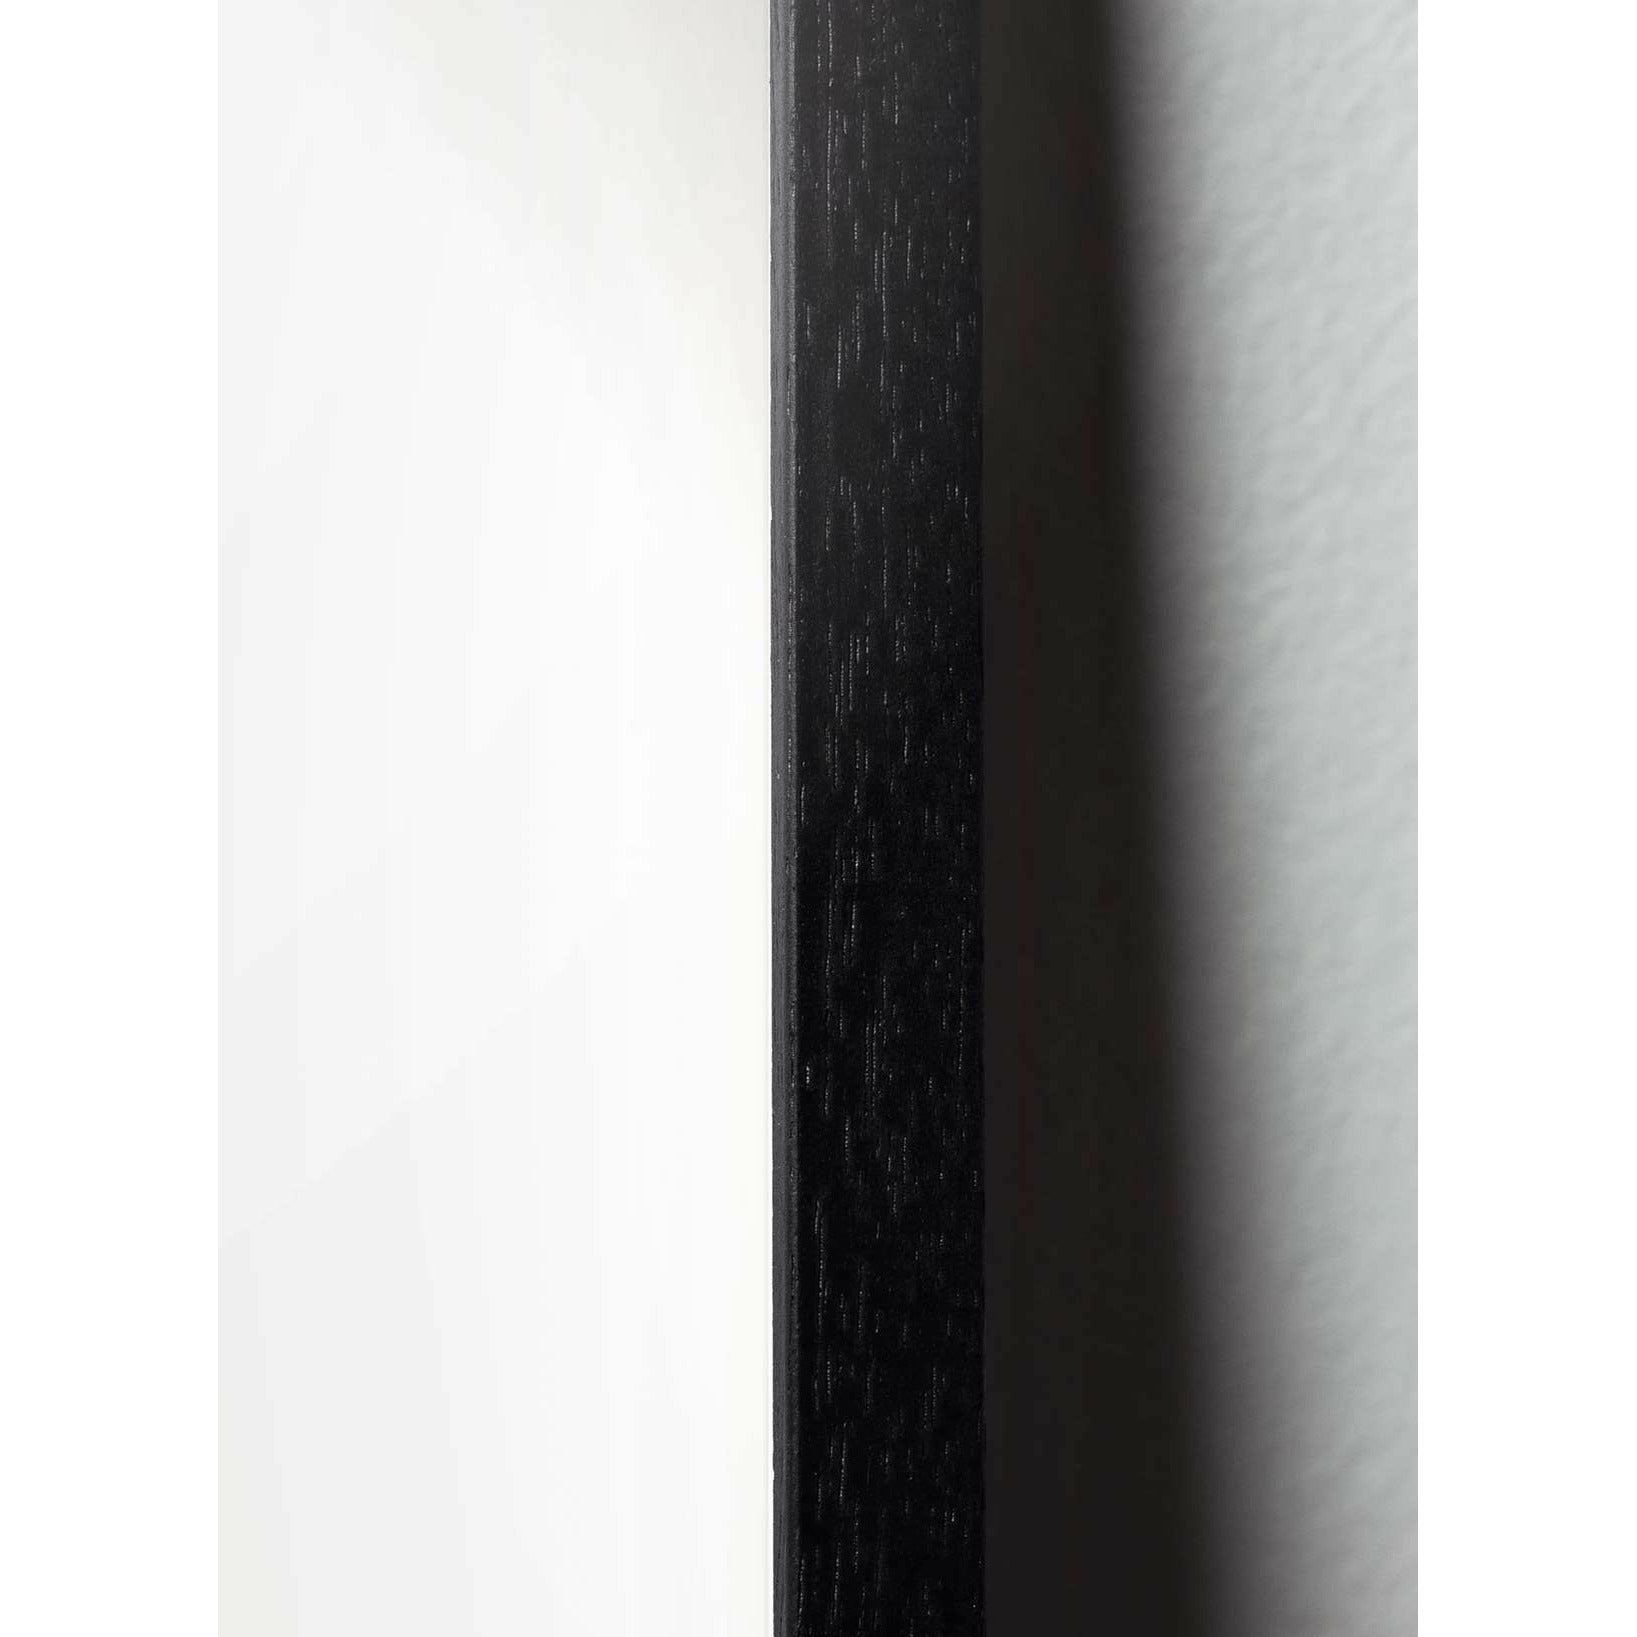 Brainchild Droppe linjeffisch, ram i svart målat trä 50x70 cm, vit bakgrund